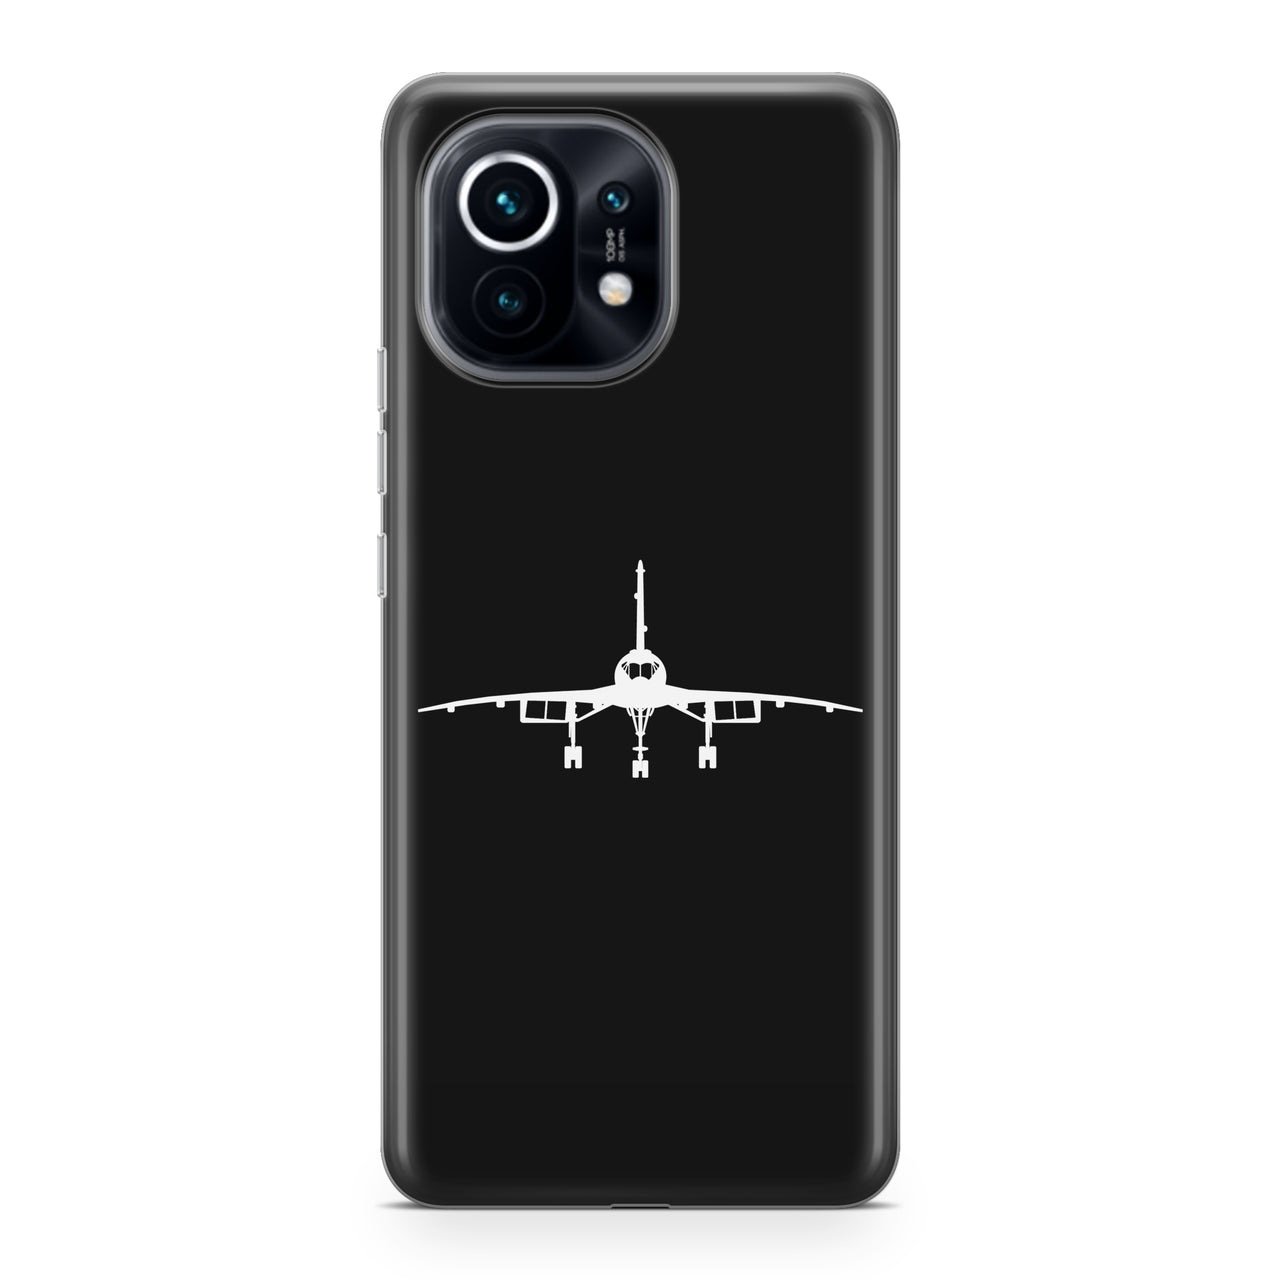 Concorde Silhouette Designed Xiaomi Cases